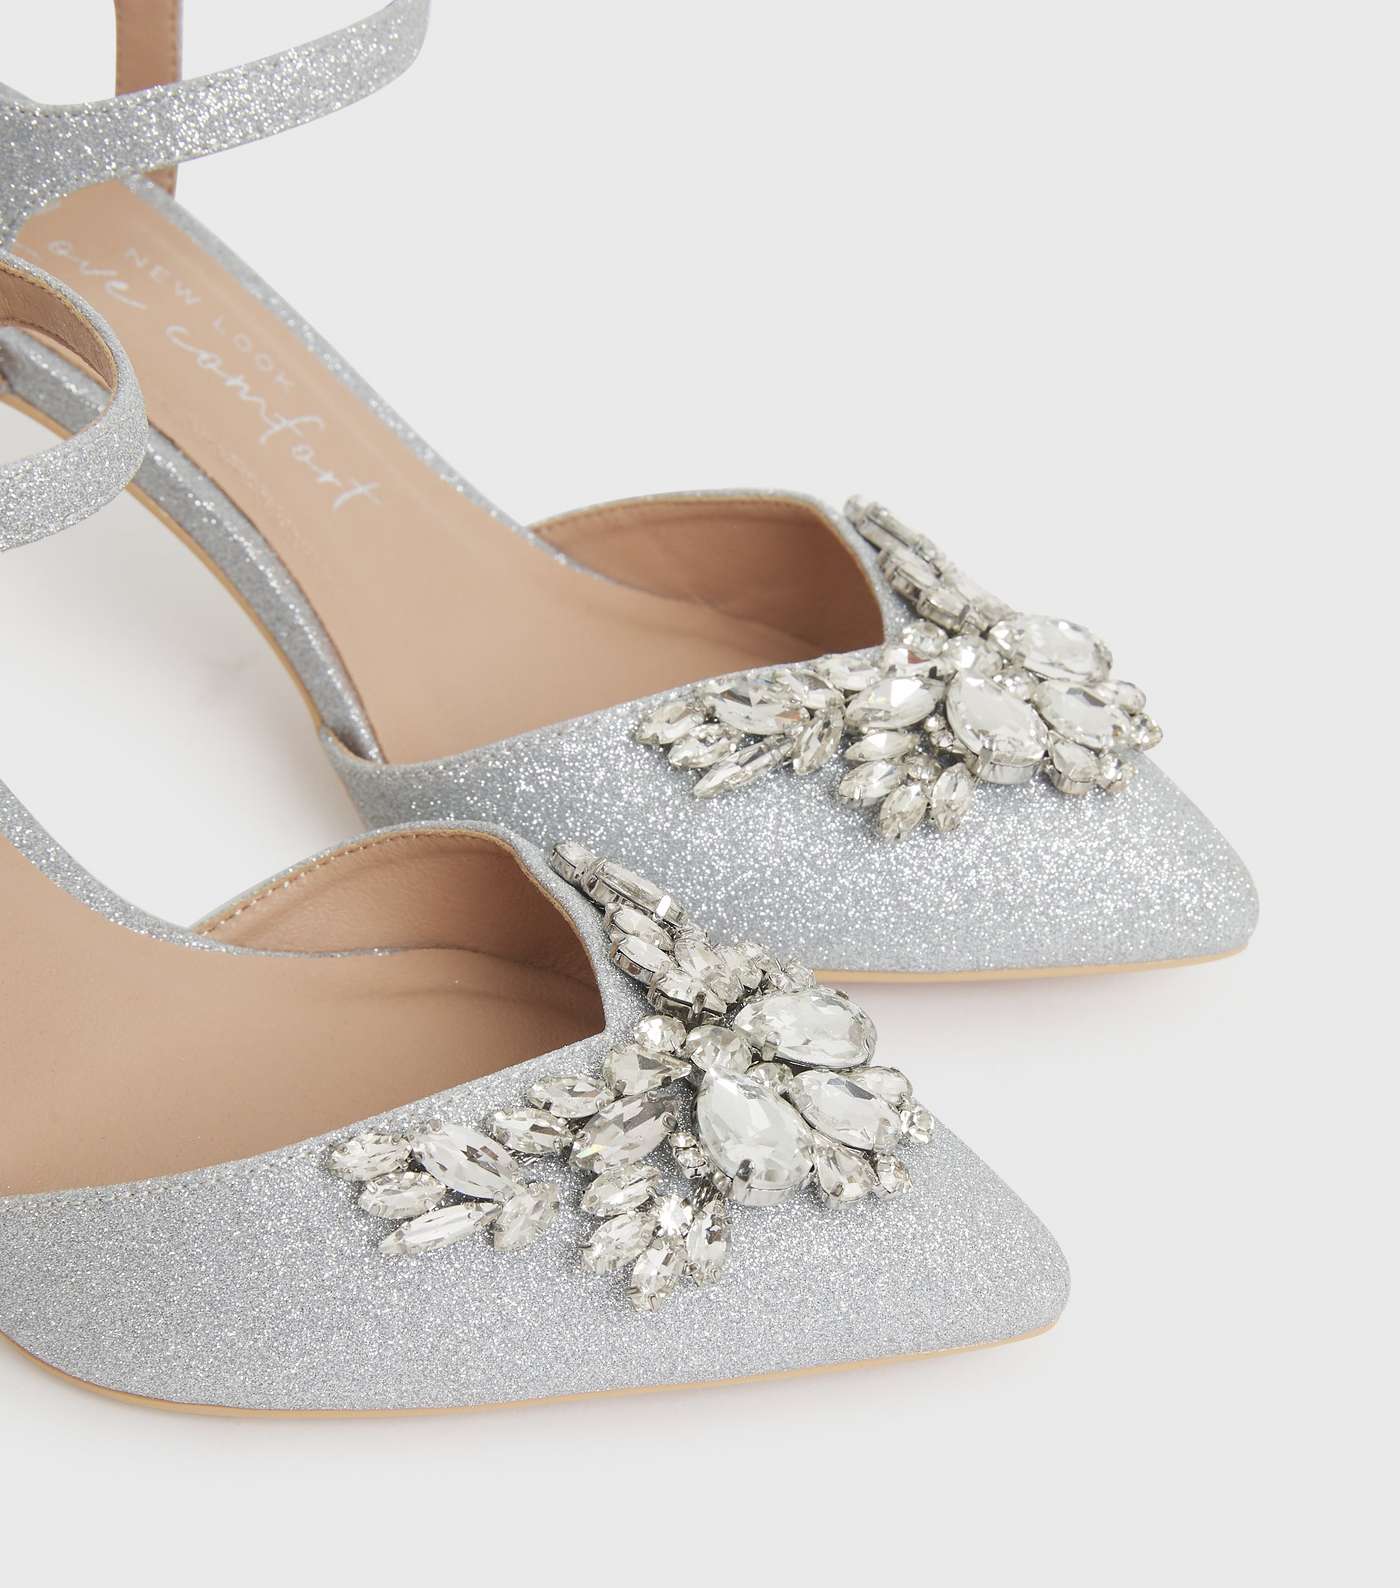 Wide Fit Silver Glitter Gem Pointed Stiletto Heel Sandals Image 3